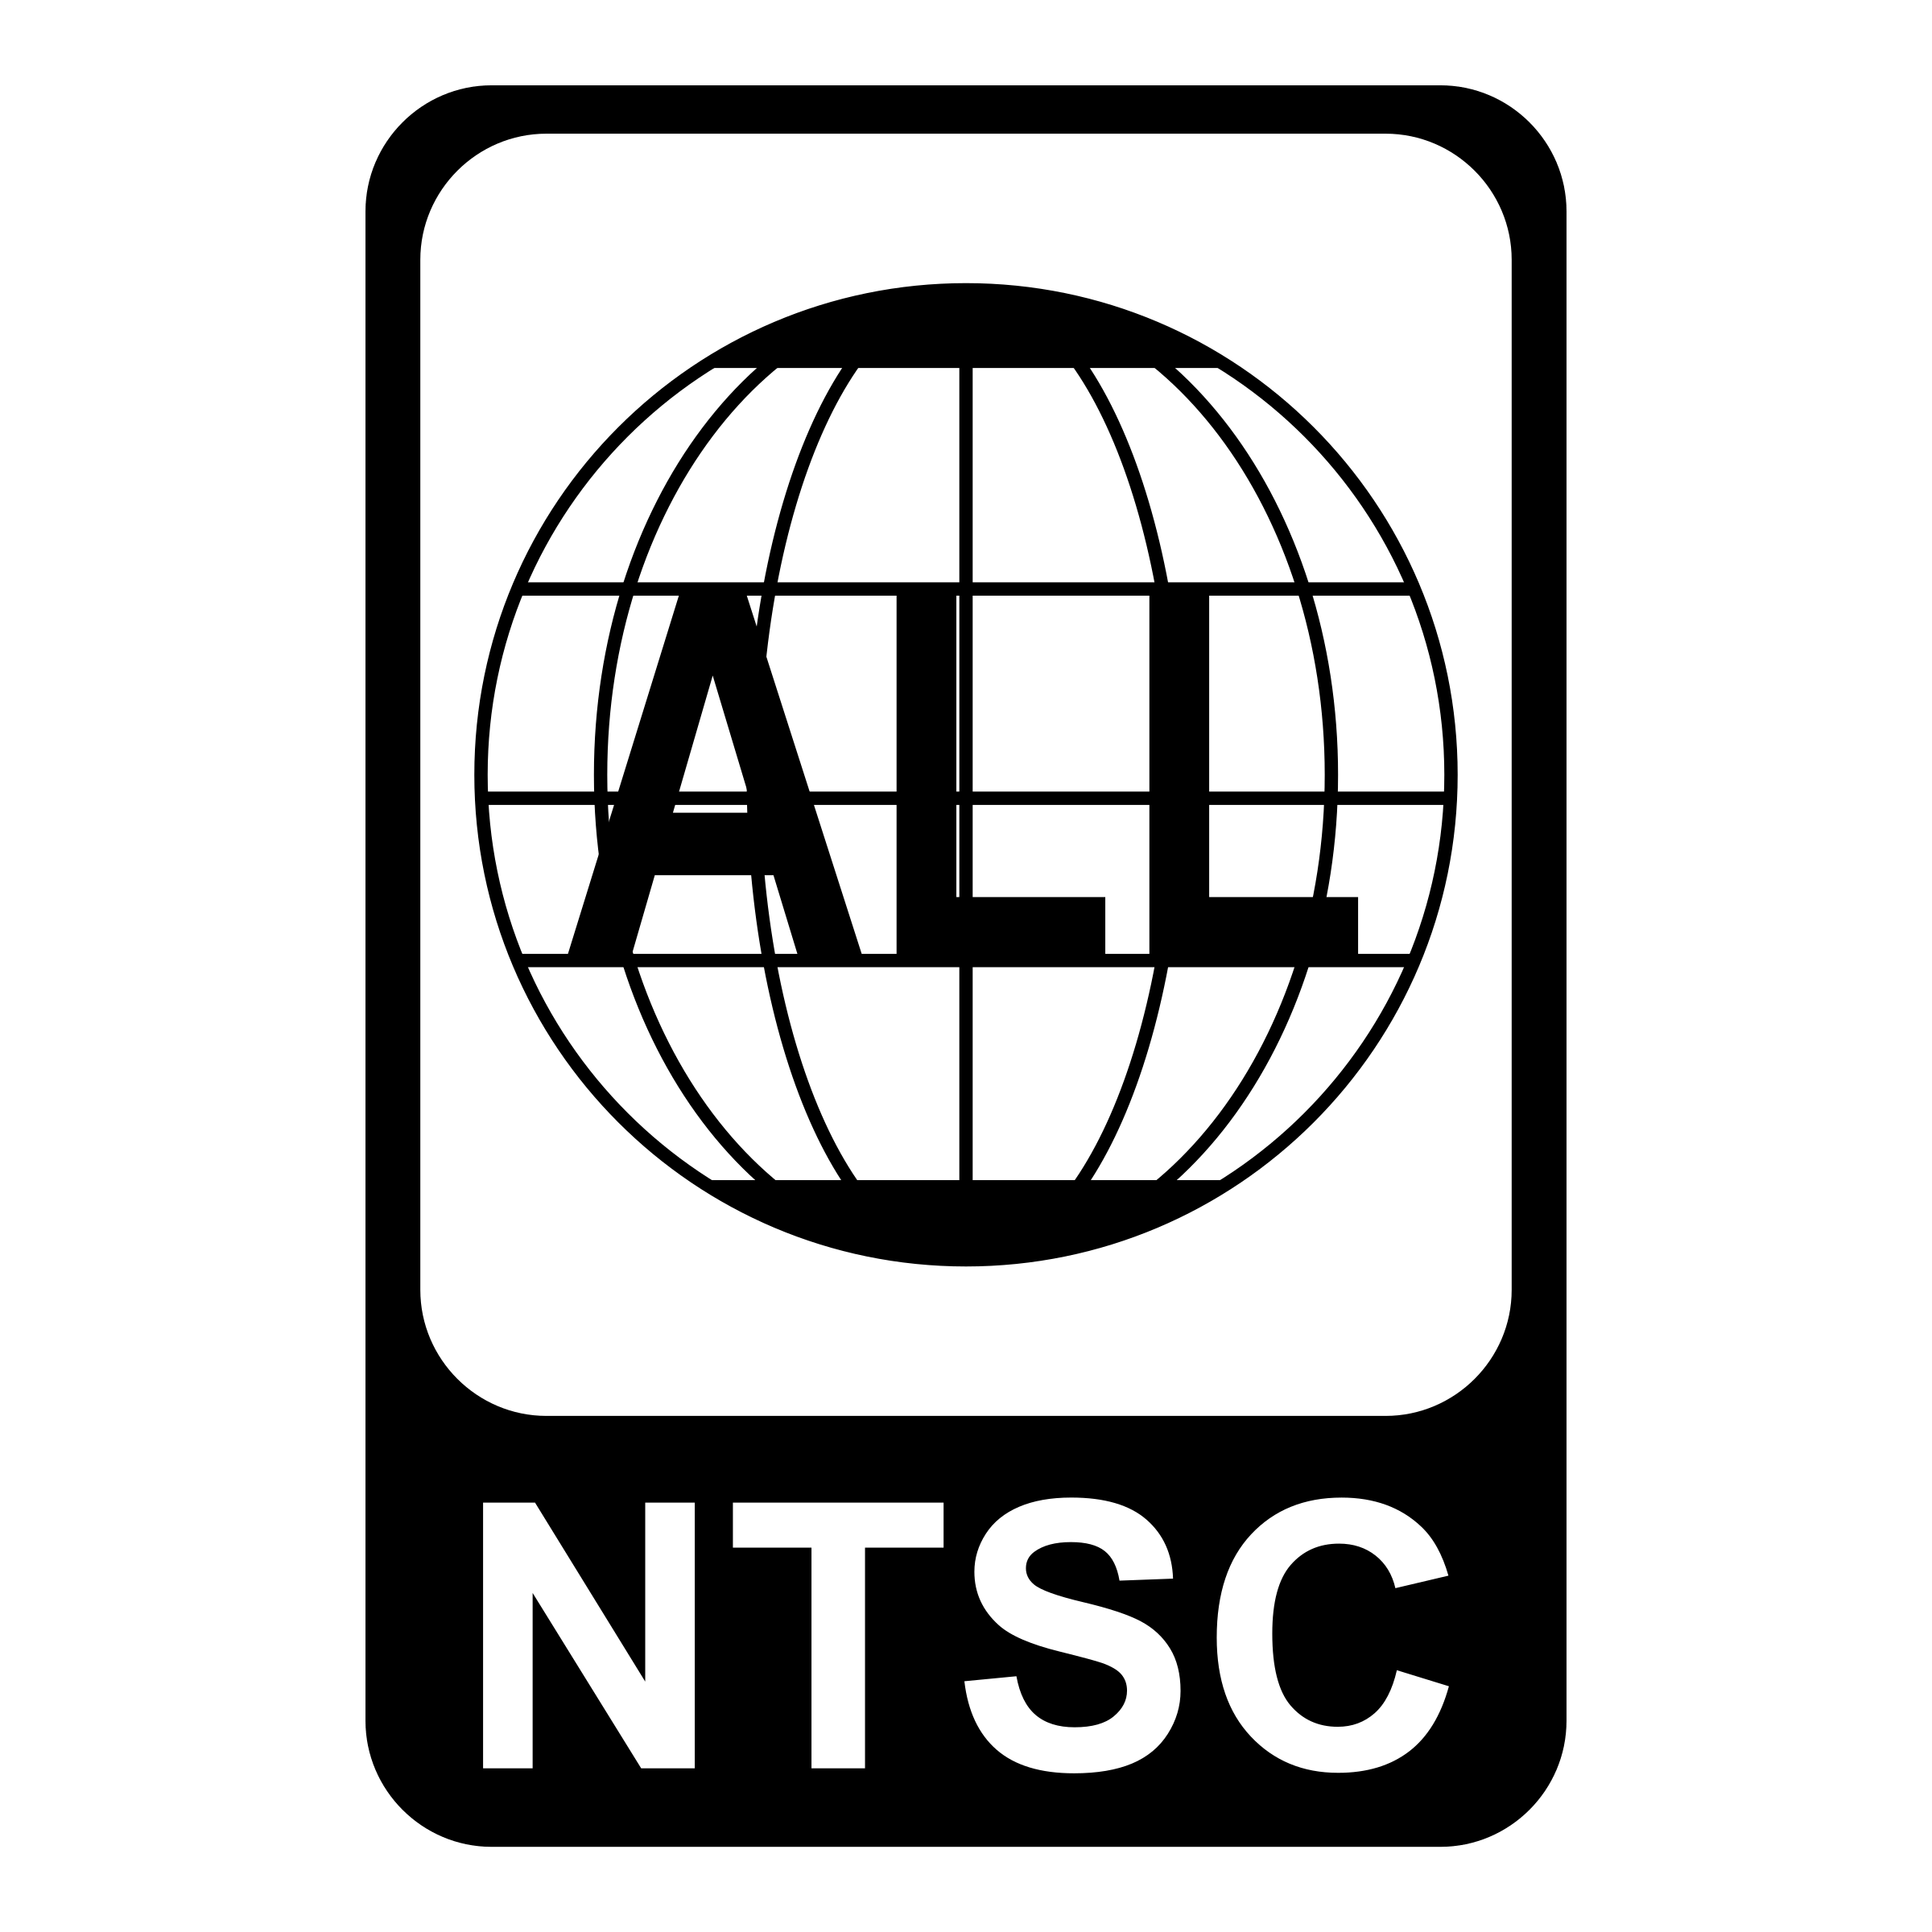 NSTC Logo - All NTSC 01 Logo PNG Transparent & SVG Vector - Freebie Supply